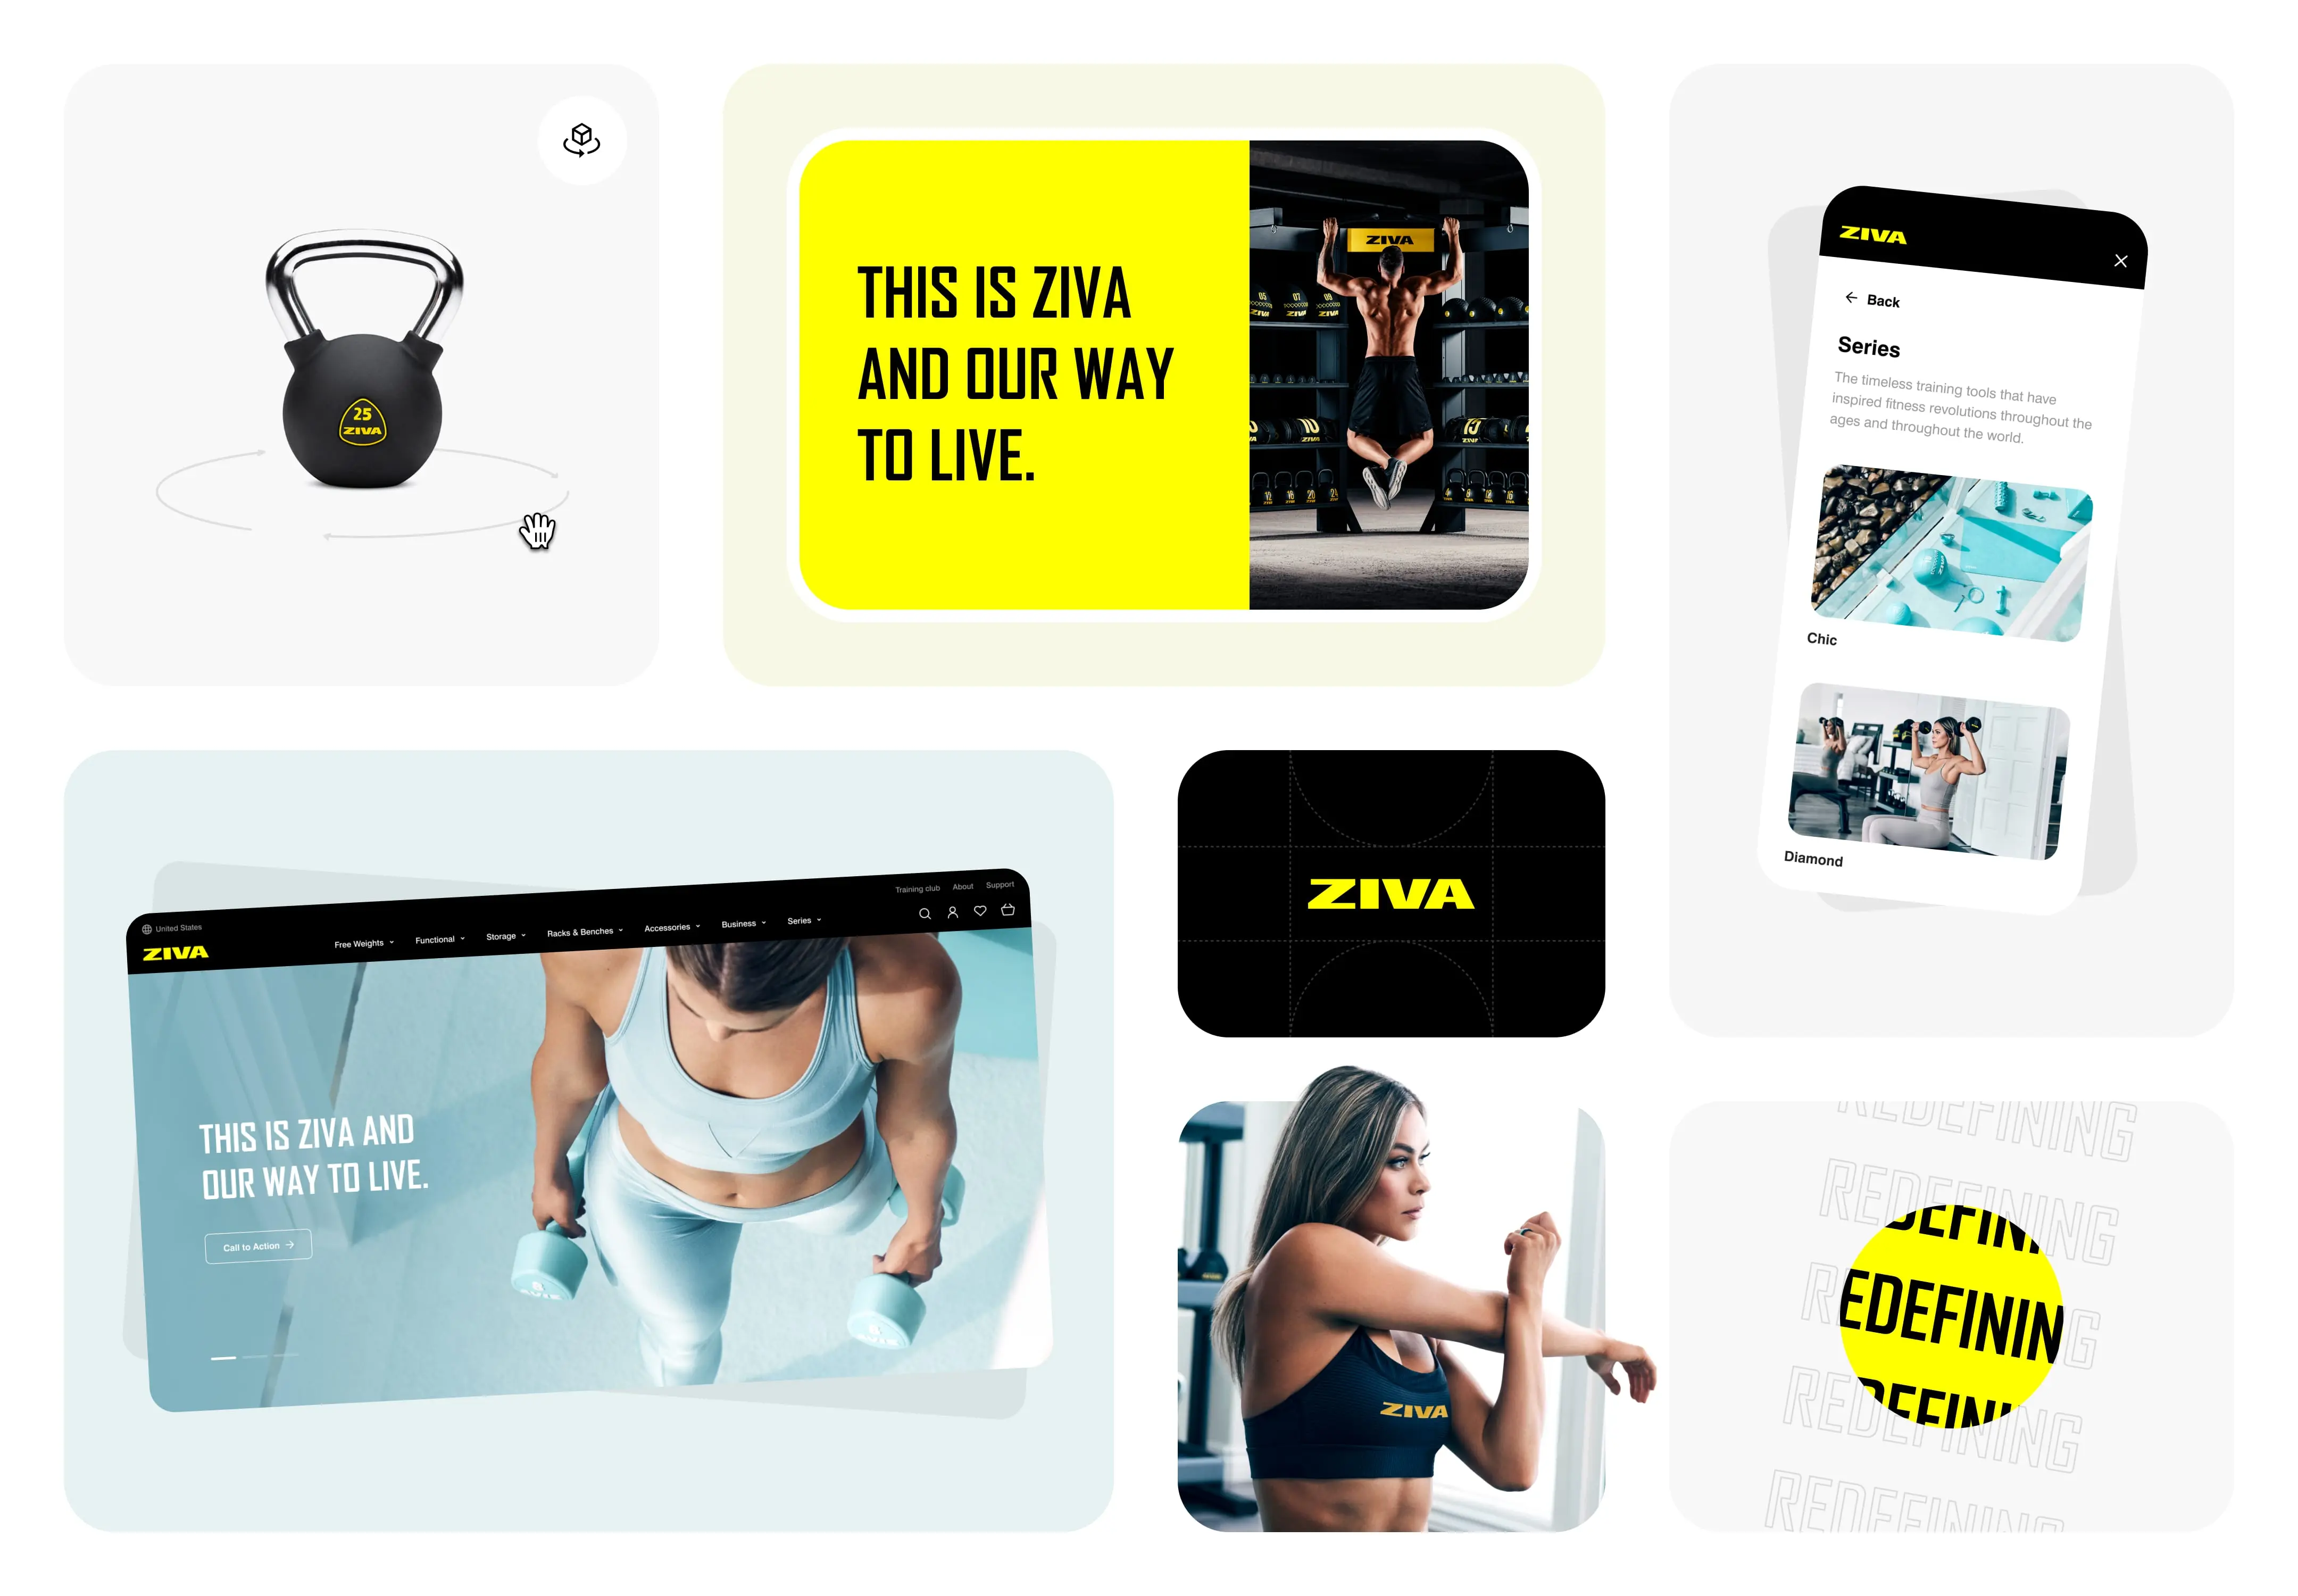 ziva ecommerce website built by Digital Creative overview